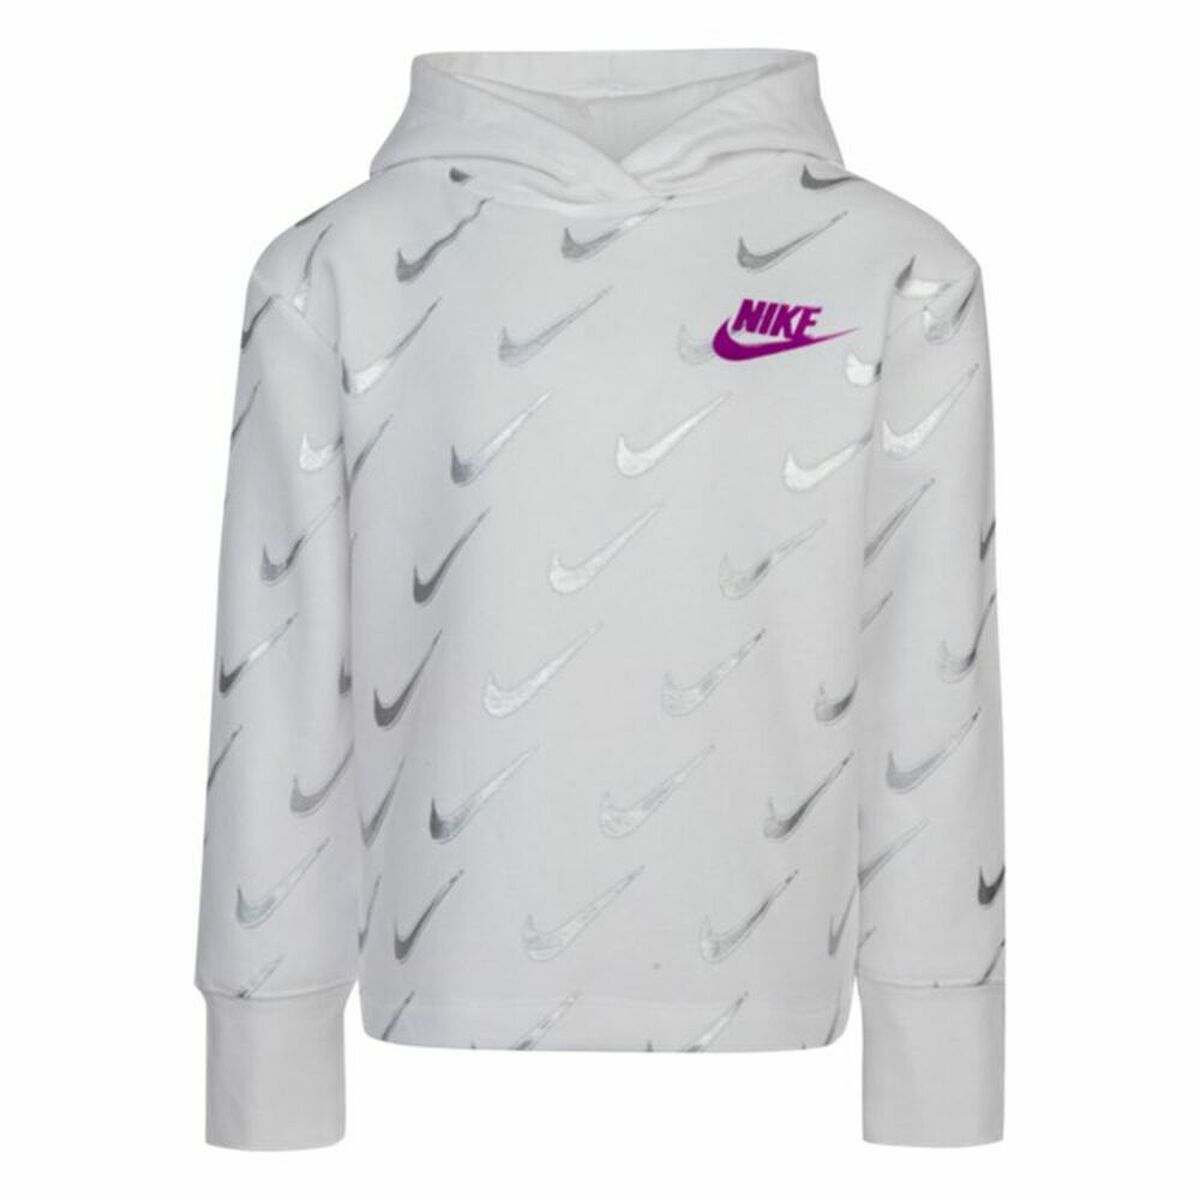 Sweat-shirt Enfant Nike Printed Fleeced Blanc